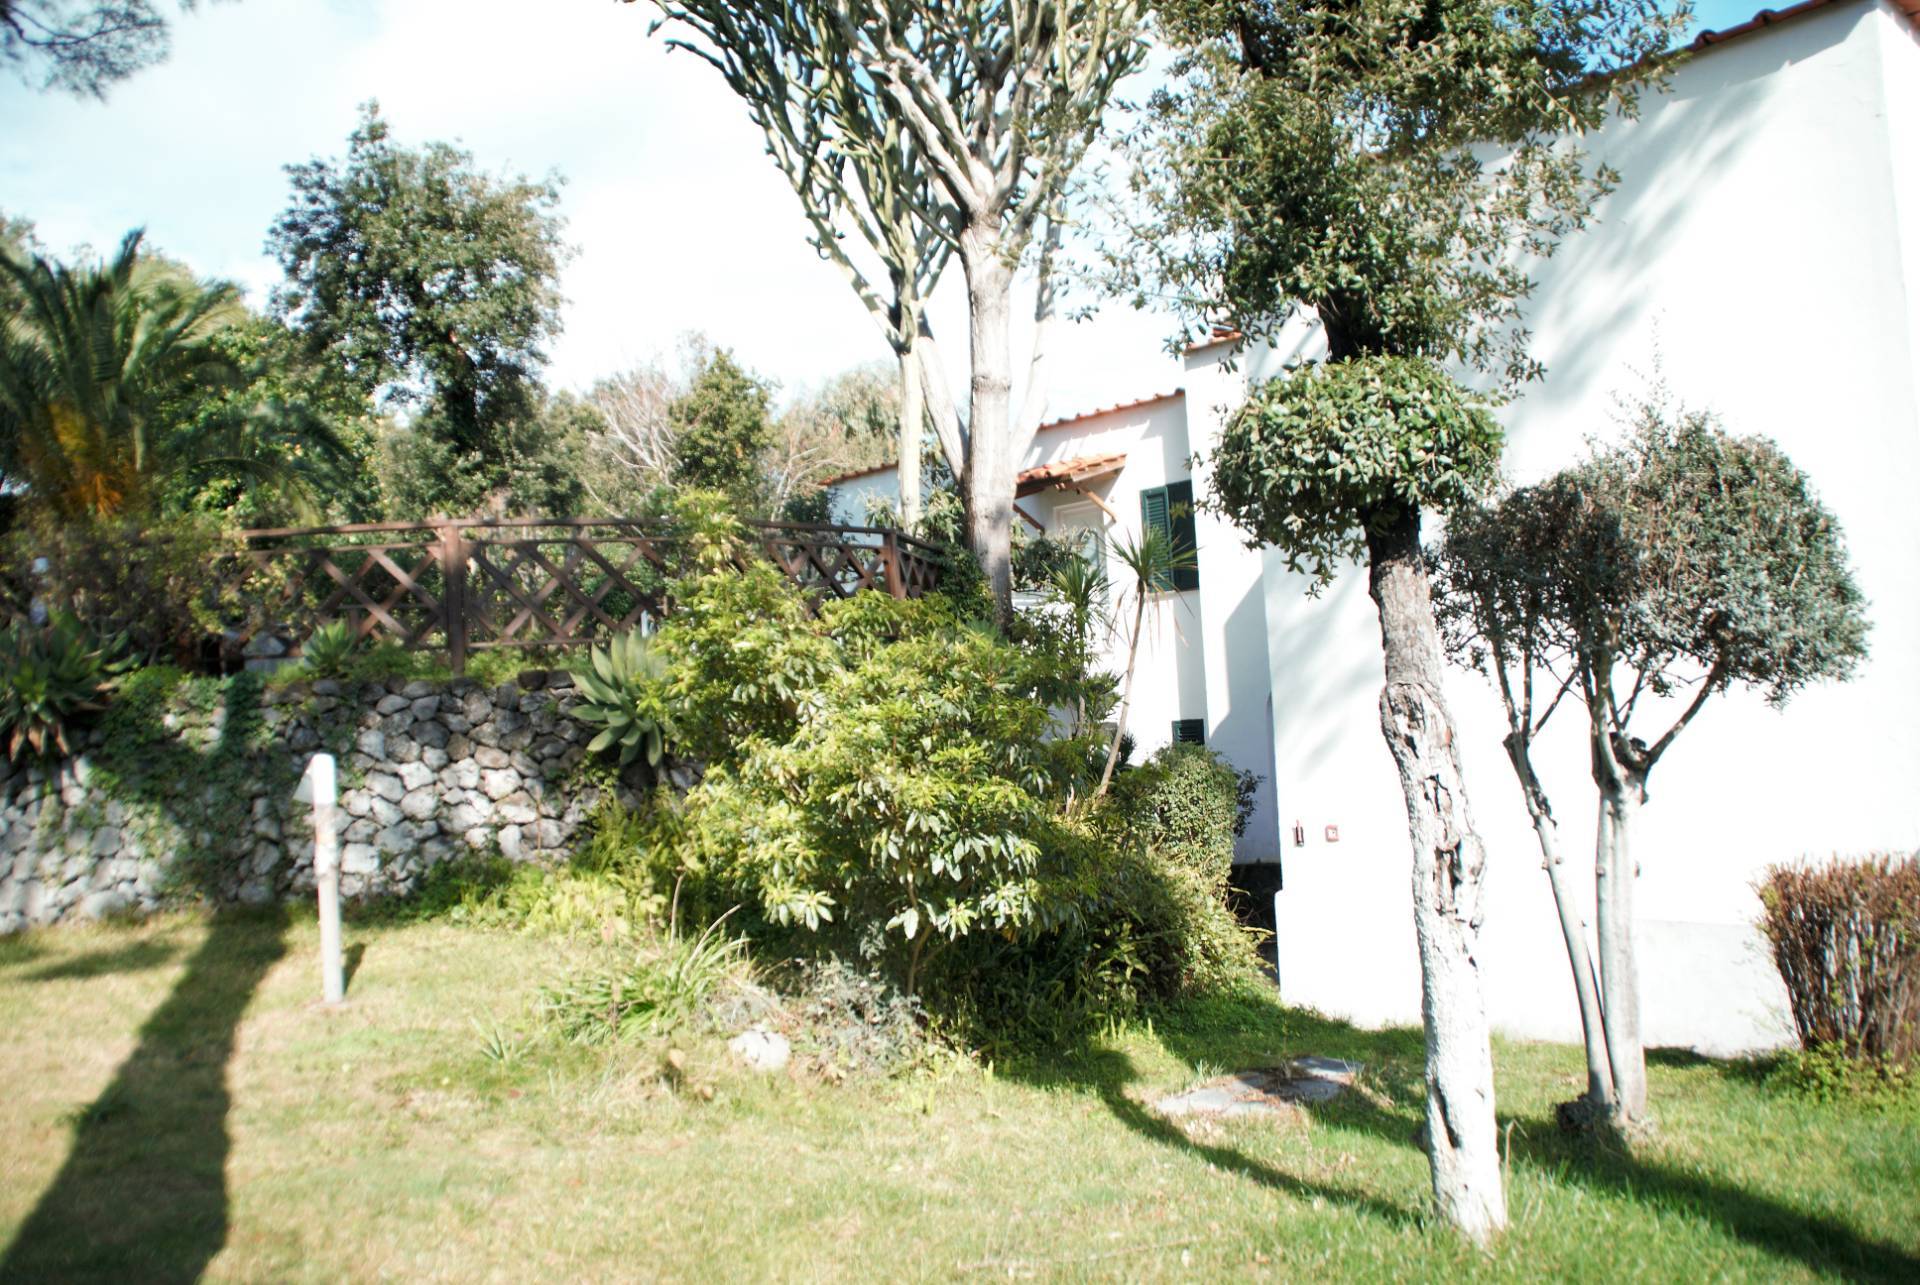 Villa in Vendita a Ischia: 5 locali, 420 mq - Foto 7